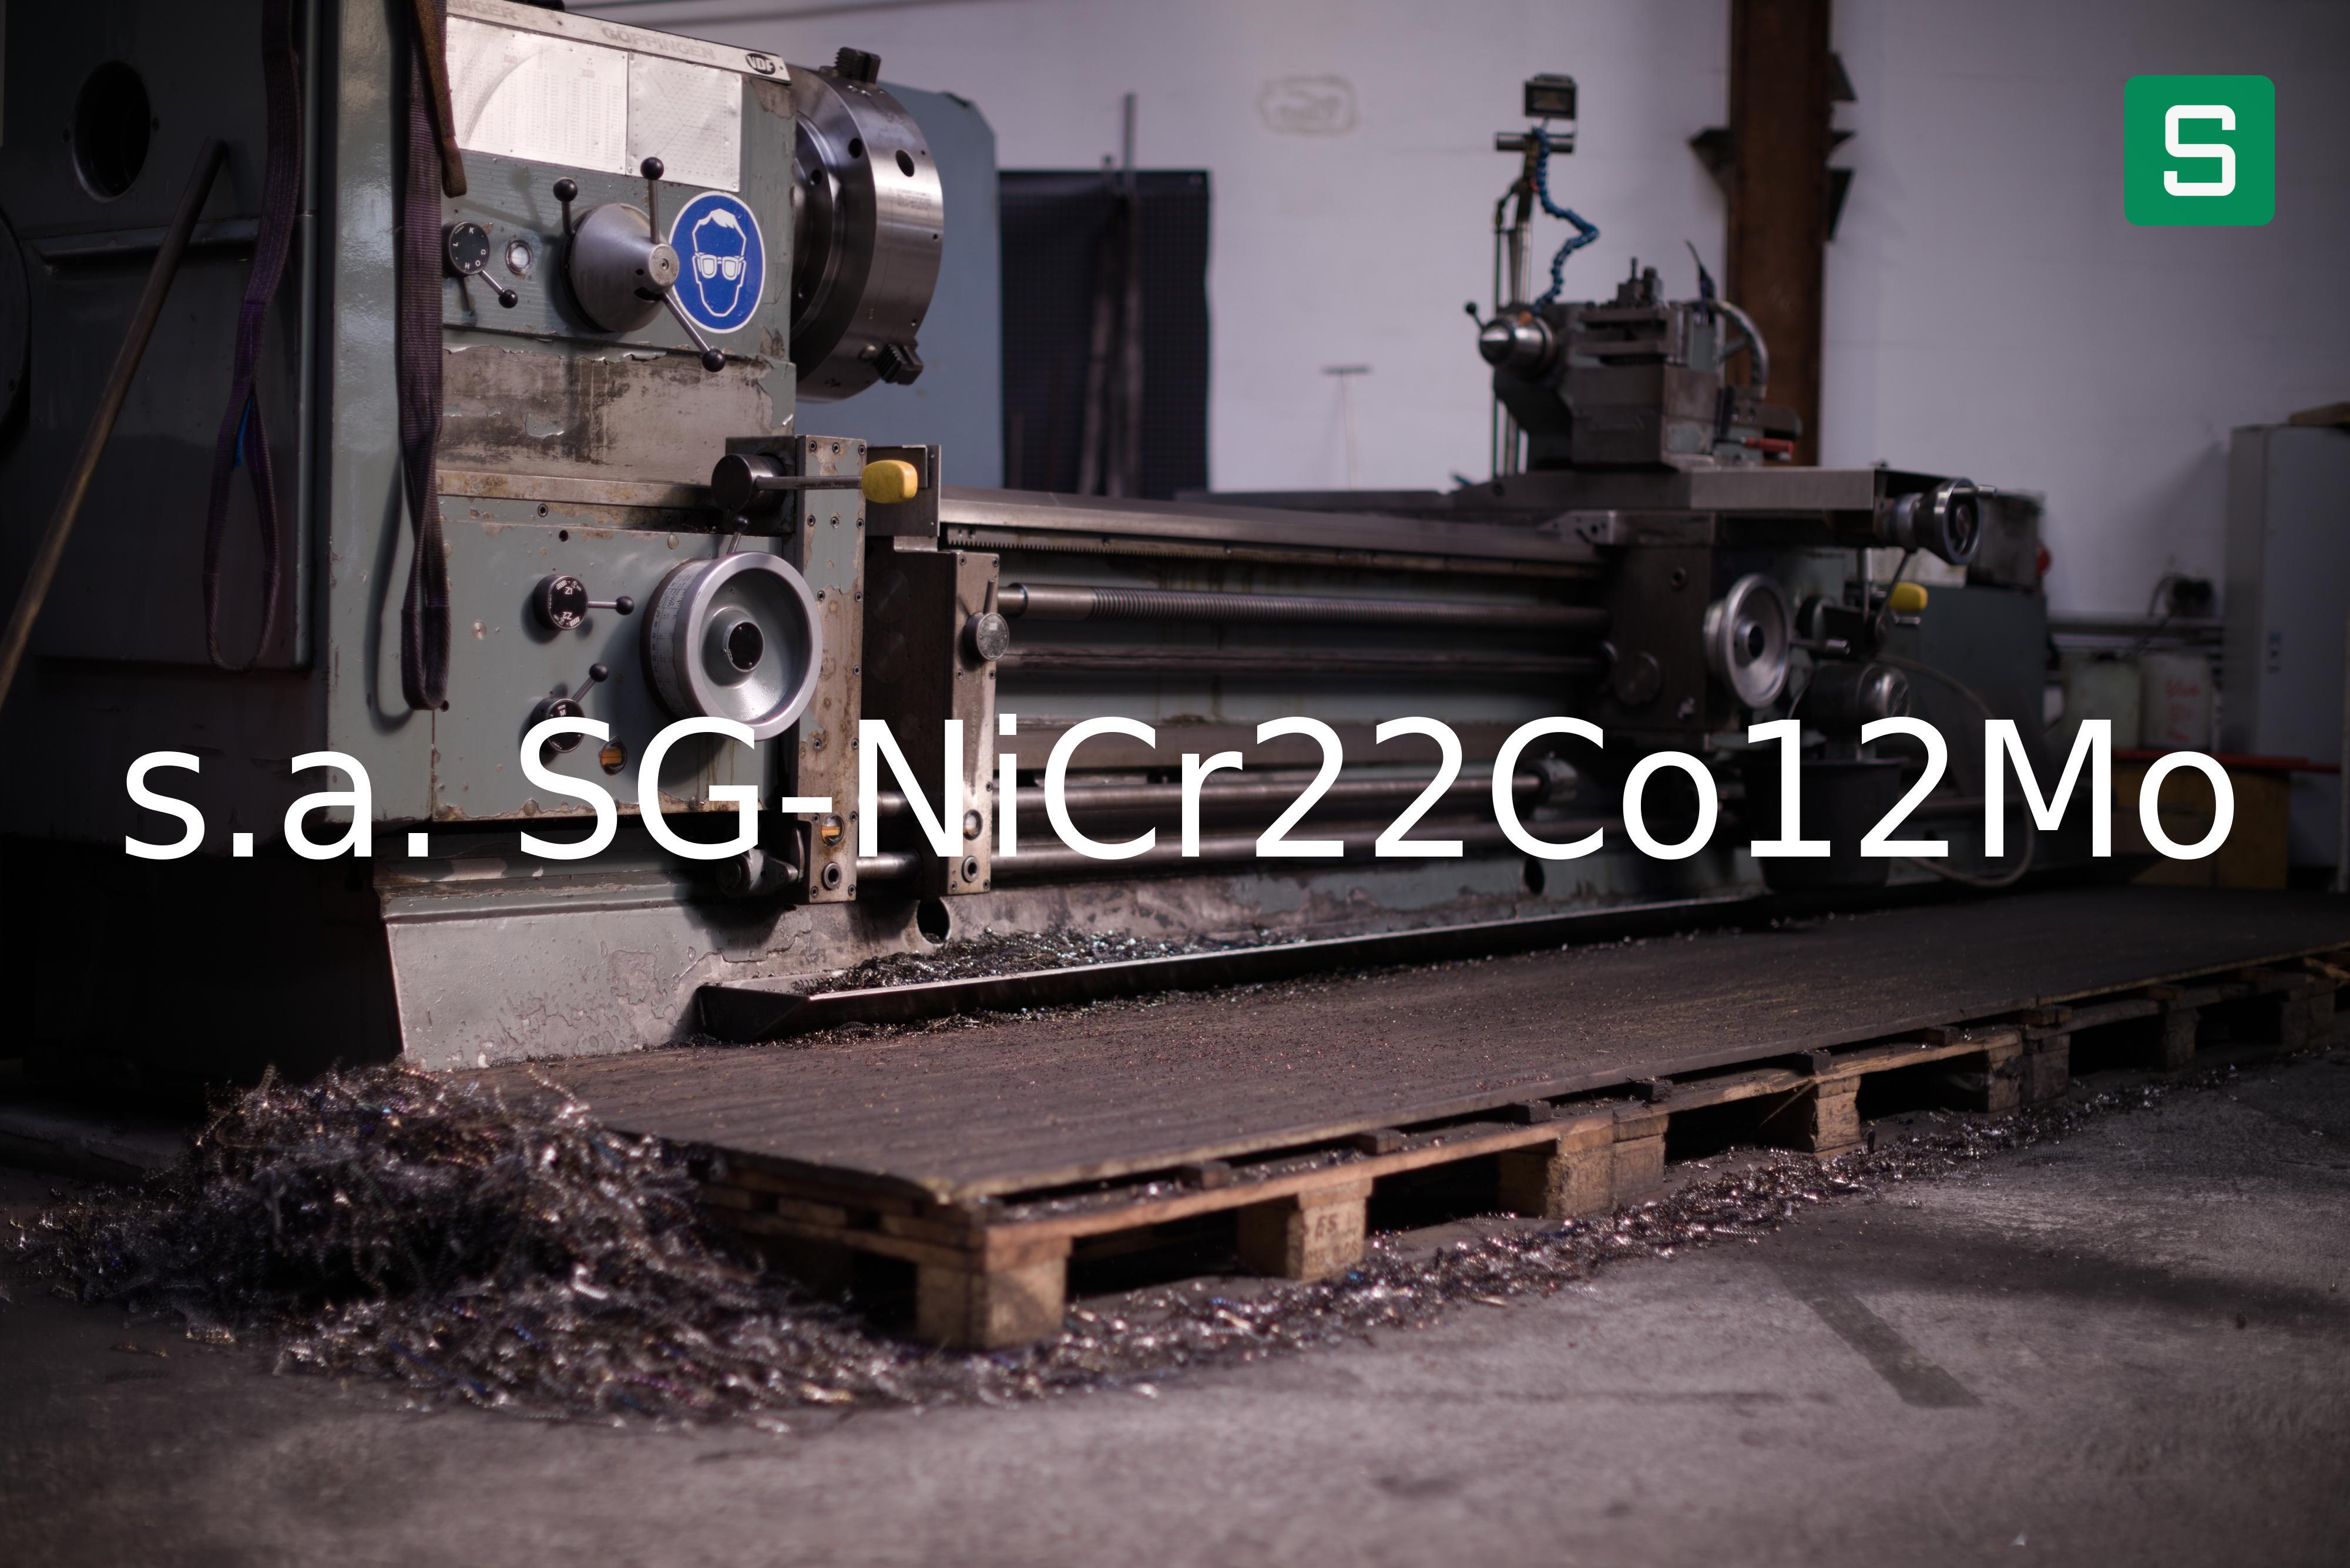 Steel Material: s.a. SG-NiCr22Co12Mo